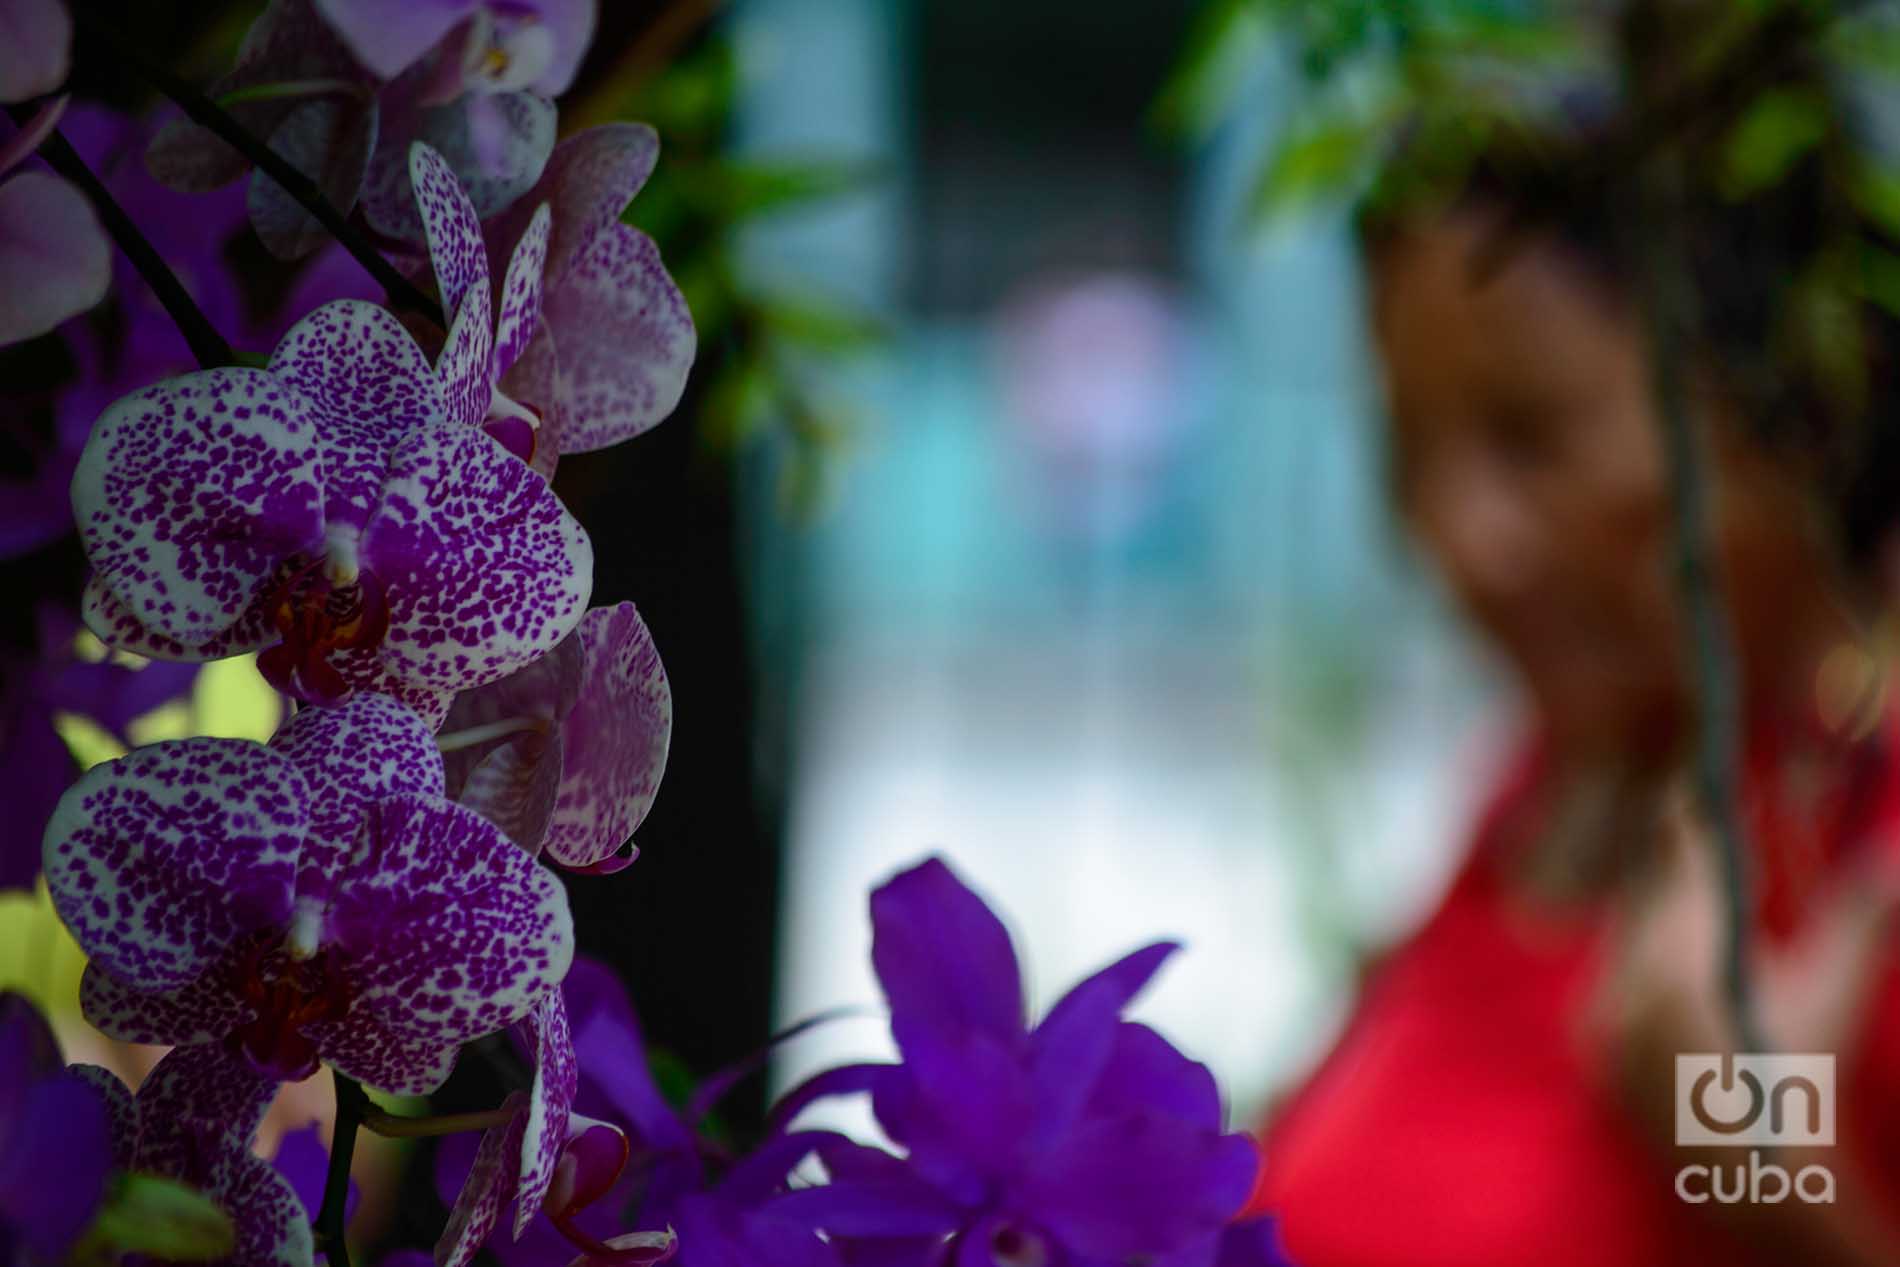 Orquídeas en La Habana | OnCubaNews